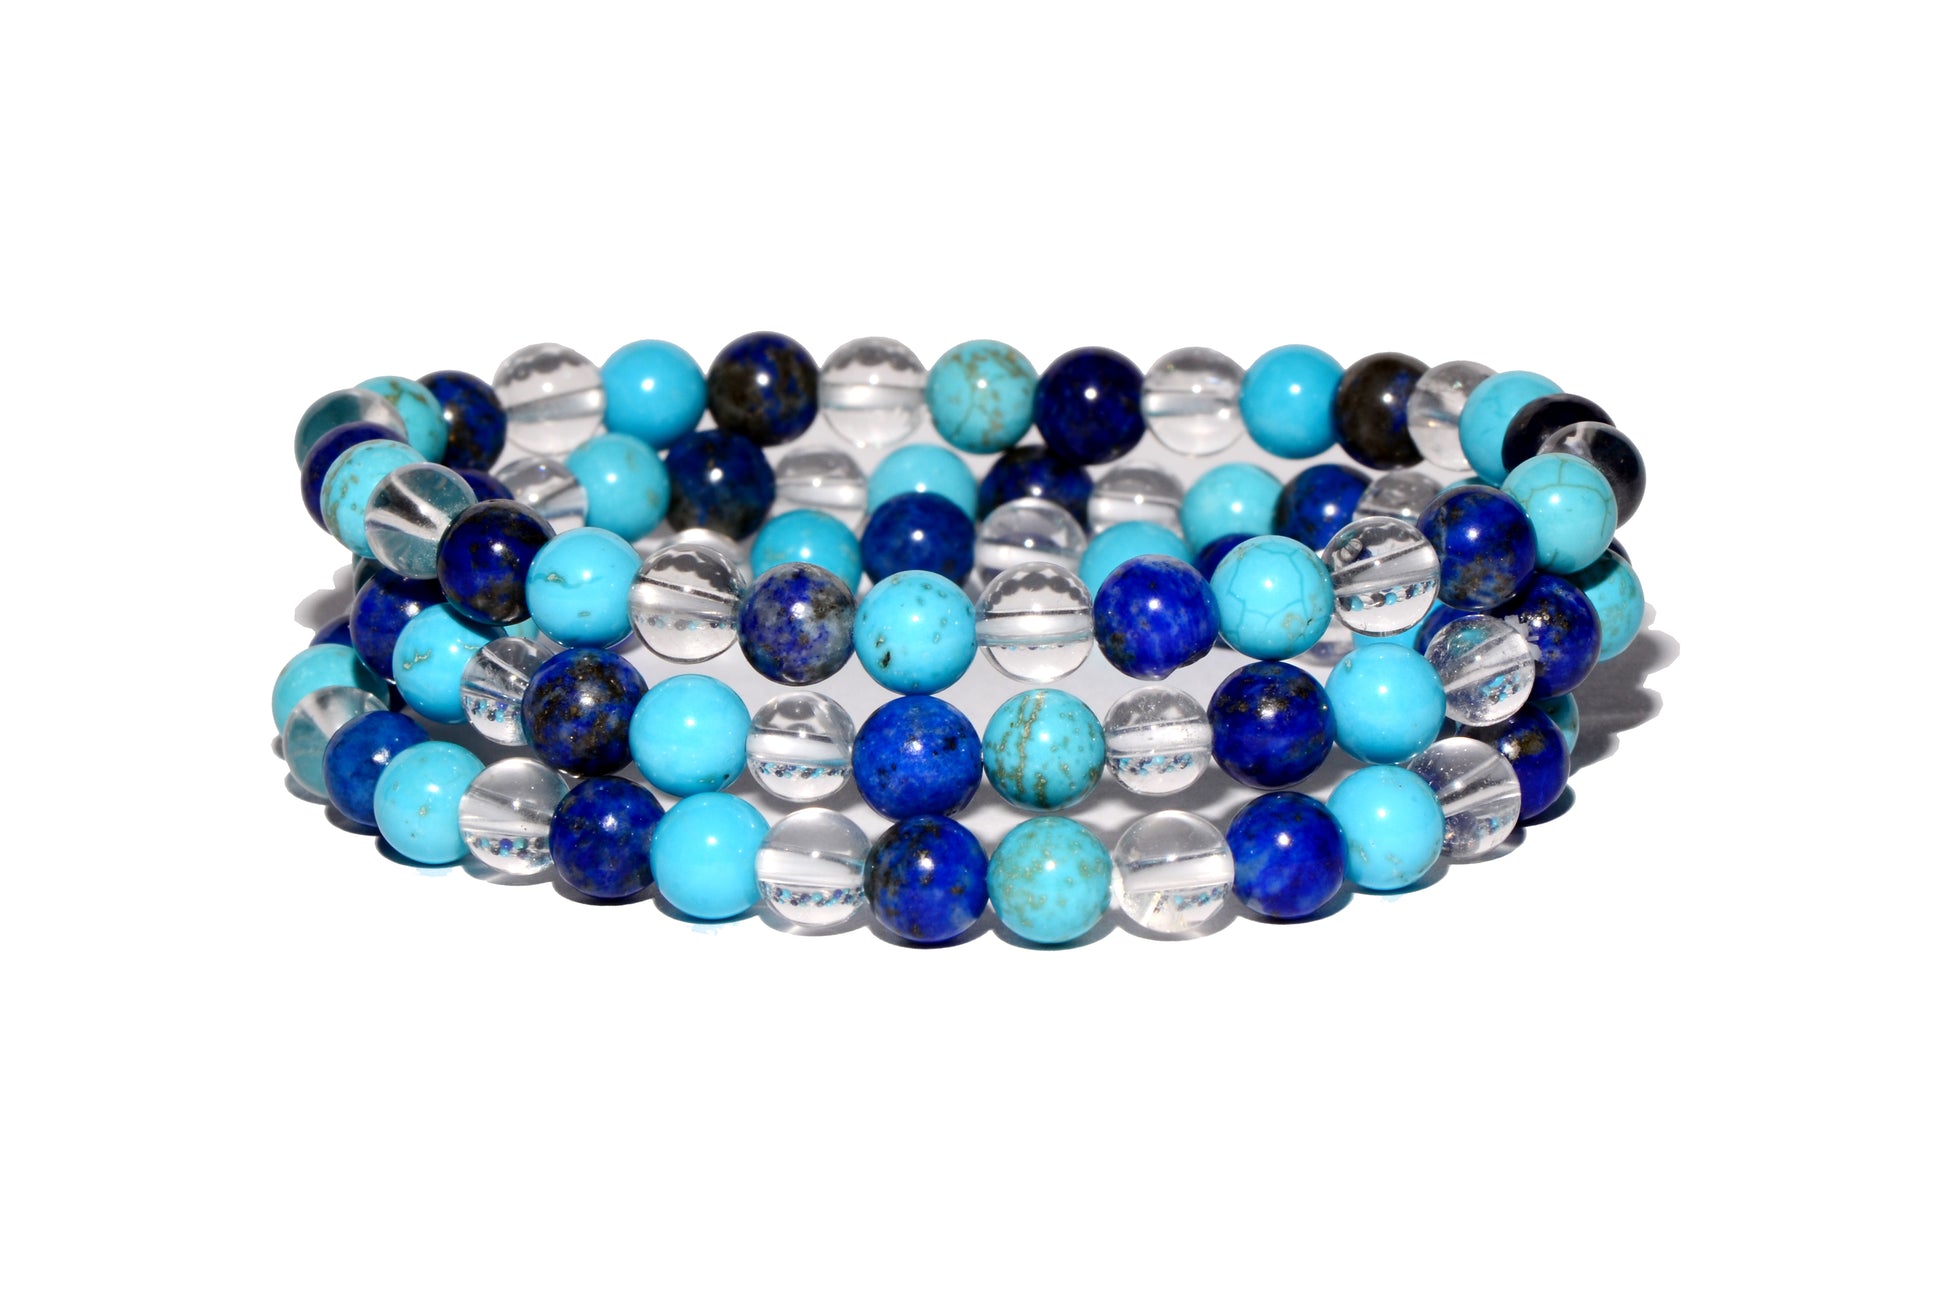 Turquoise, Lapis Lazuli and Clear Quartz Beaded Bracelet - Small Beads 